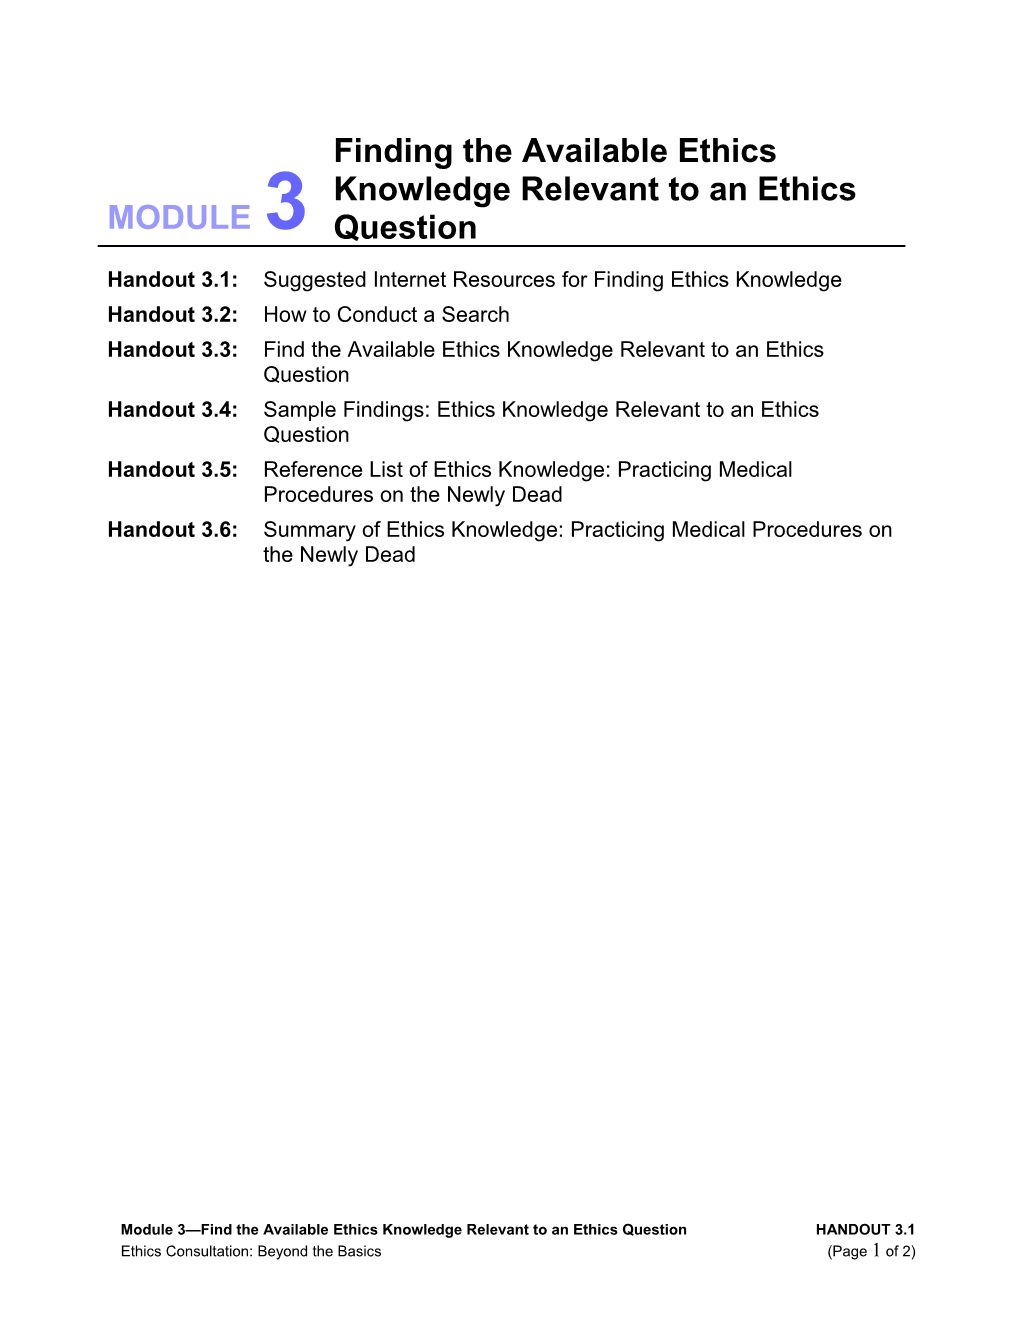 Integratedethics Ethics Consultation Beyond the Basics Module 3 - Handouts - US Department